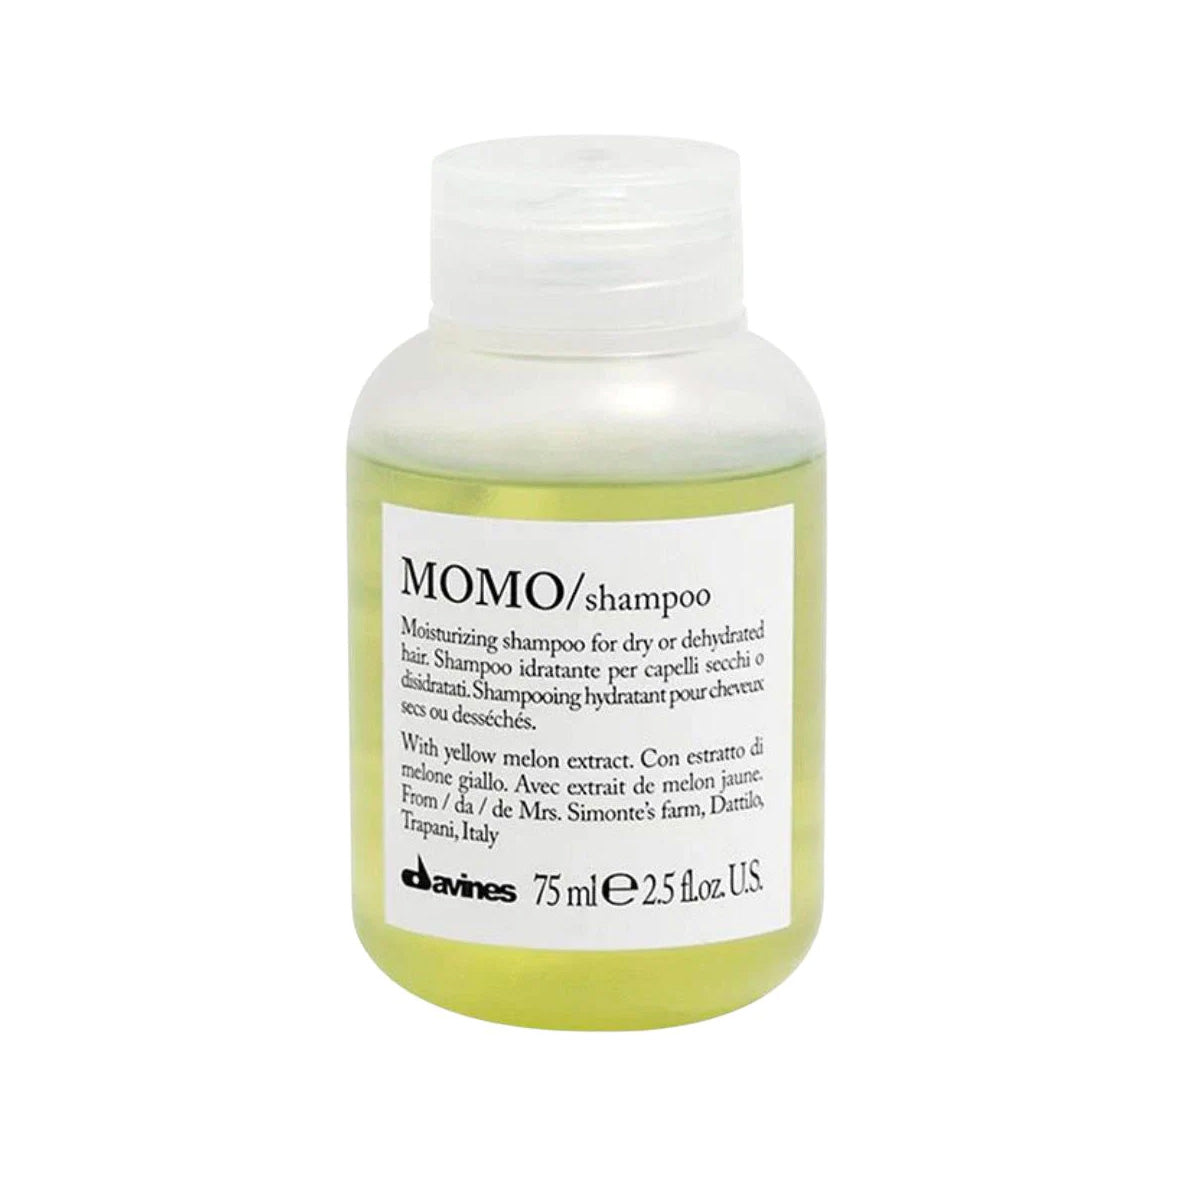 Momo/ Shampoo